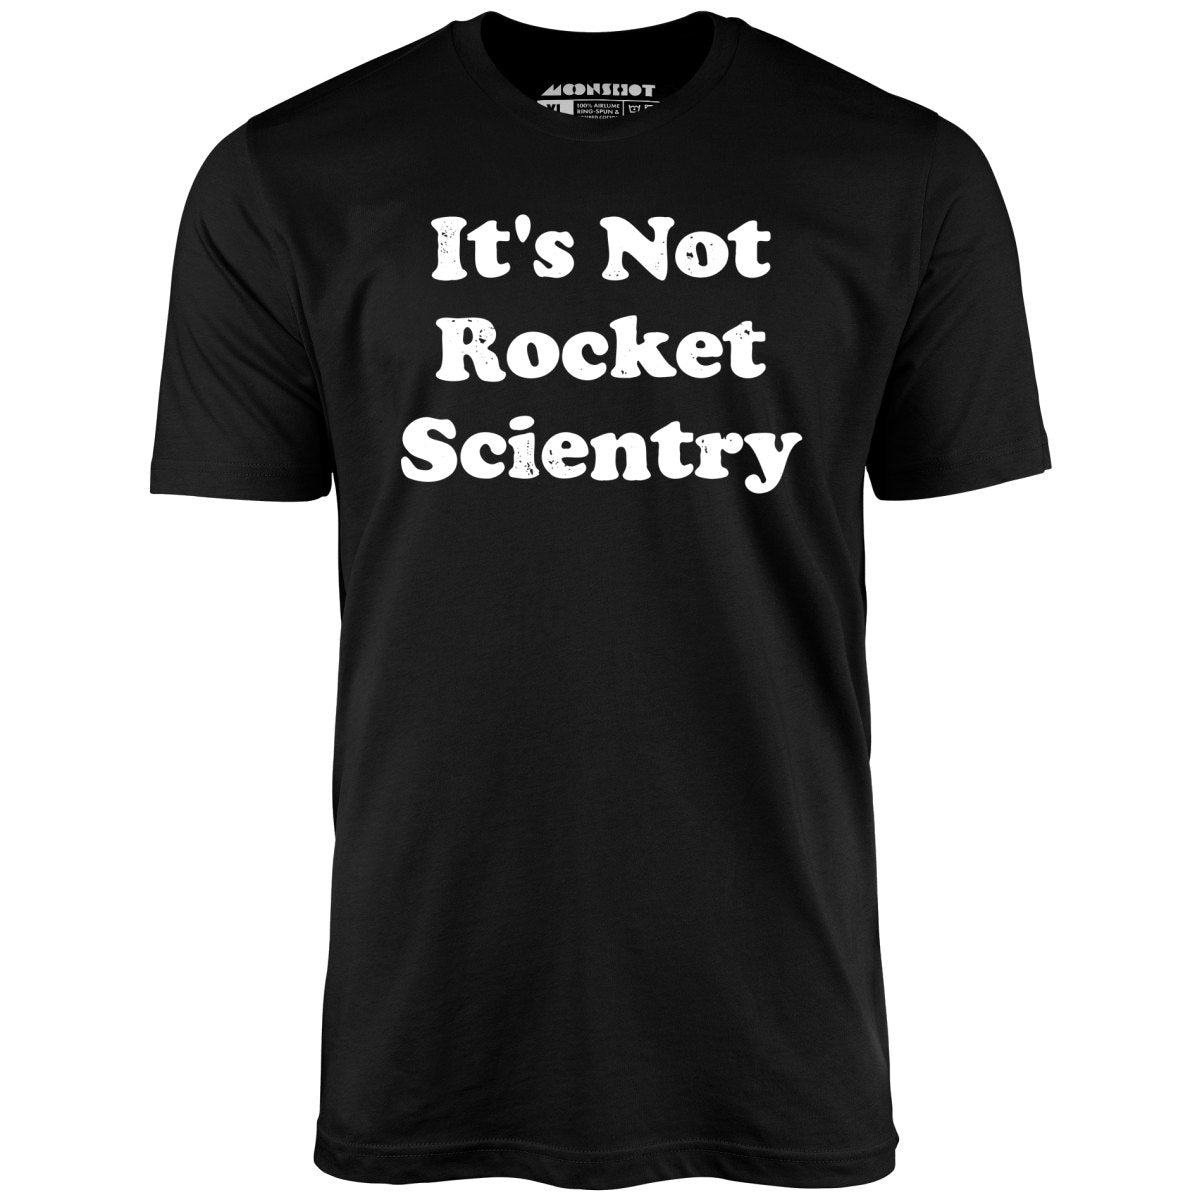 It's Not Rocket Scientry - Unisex T-Shirt